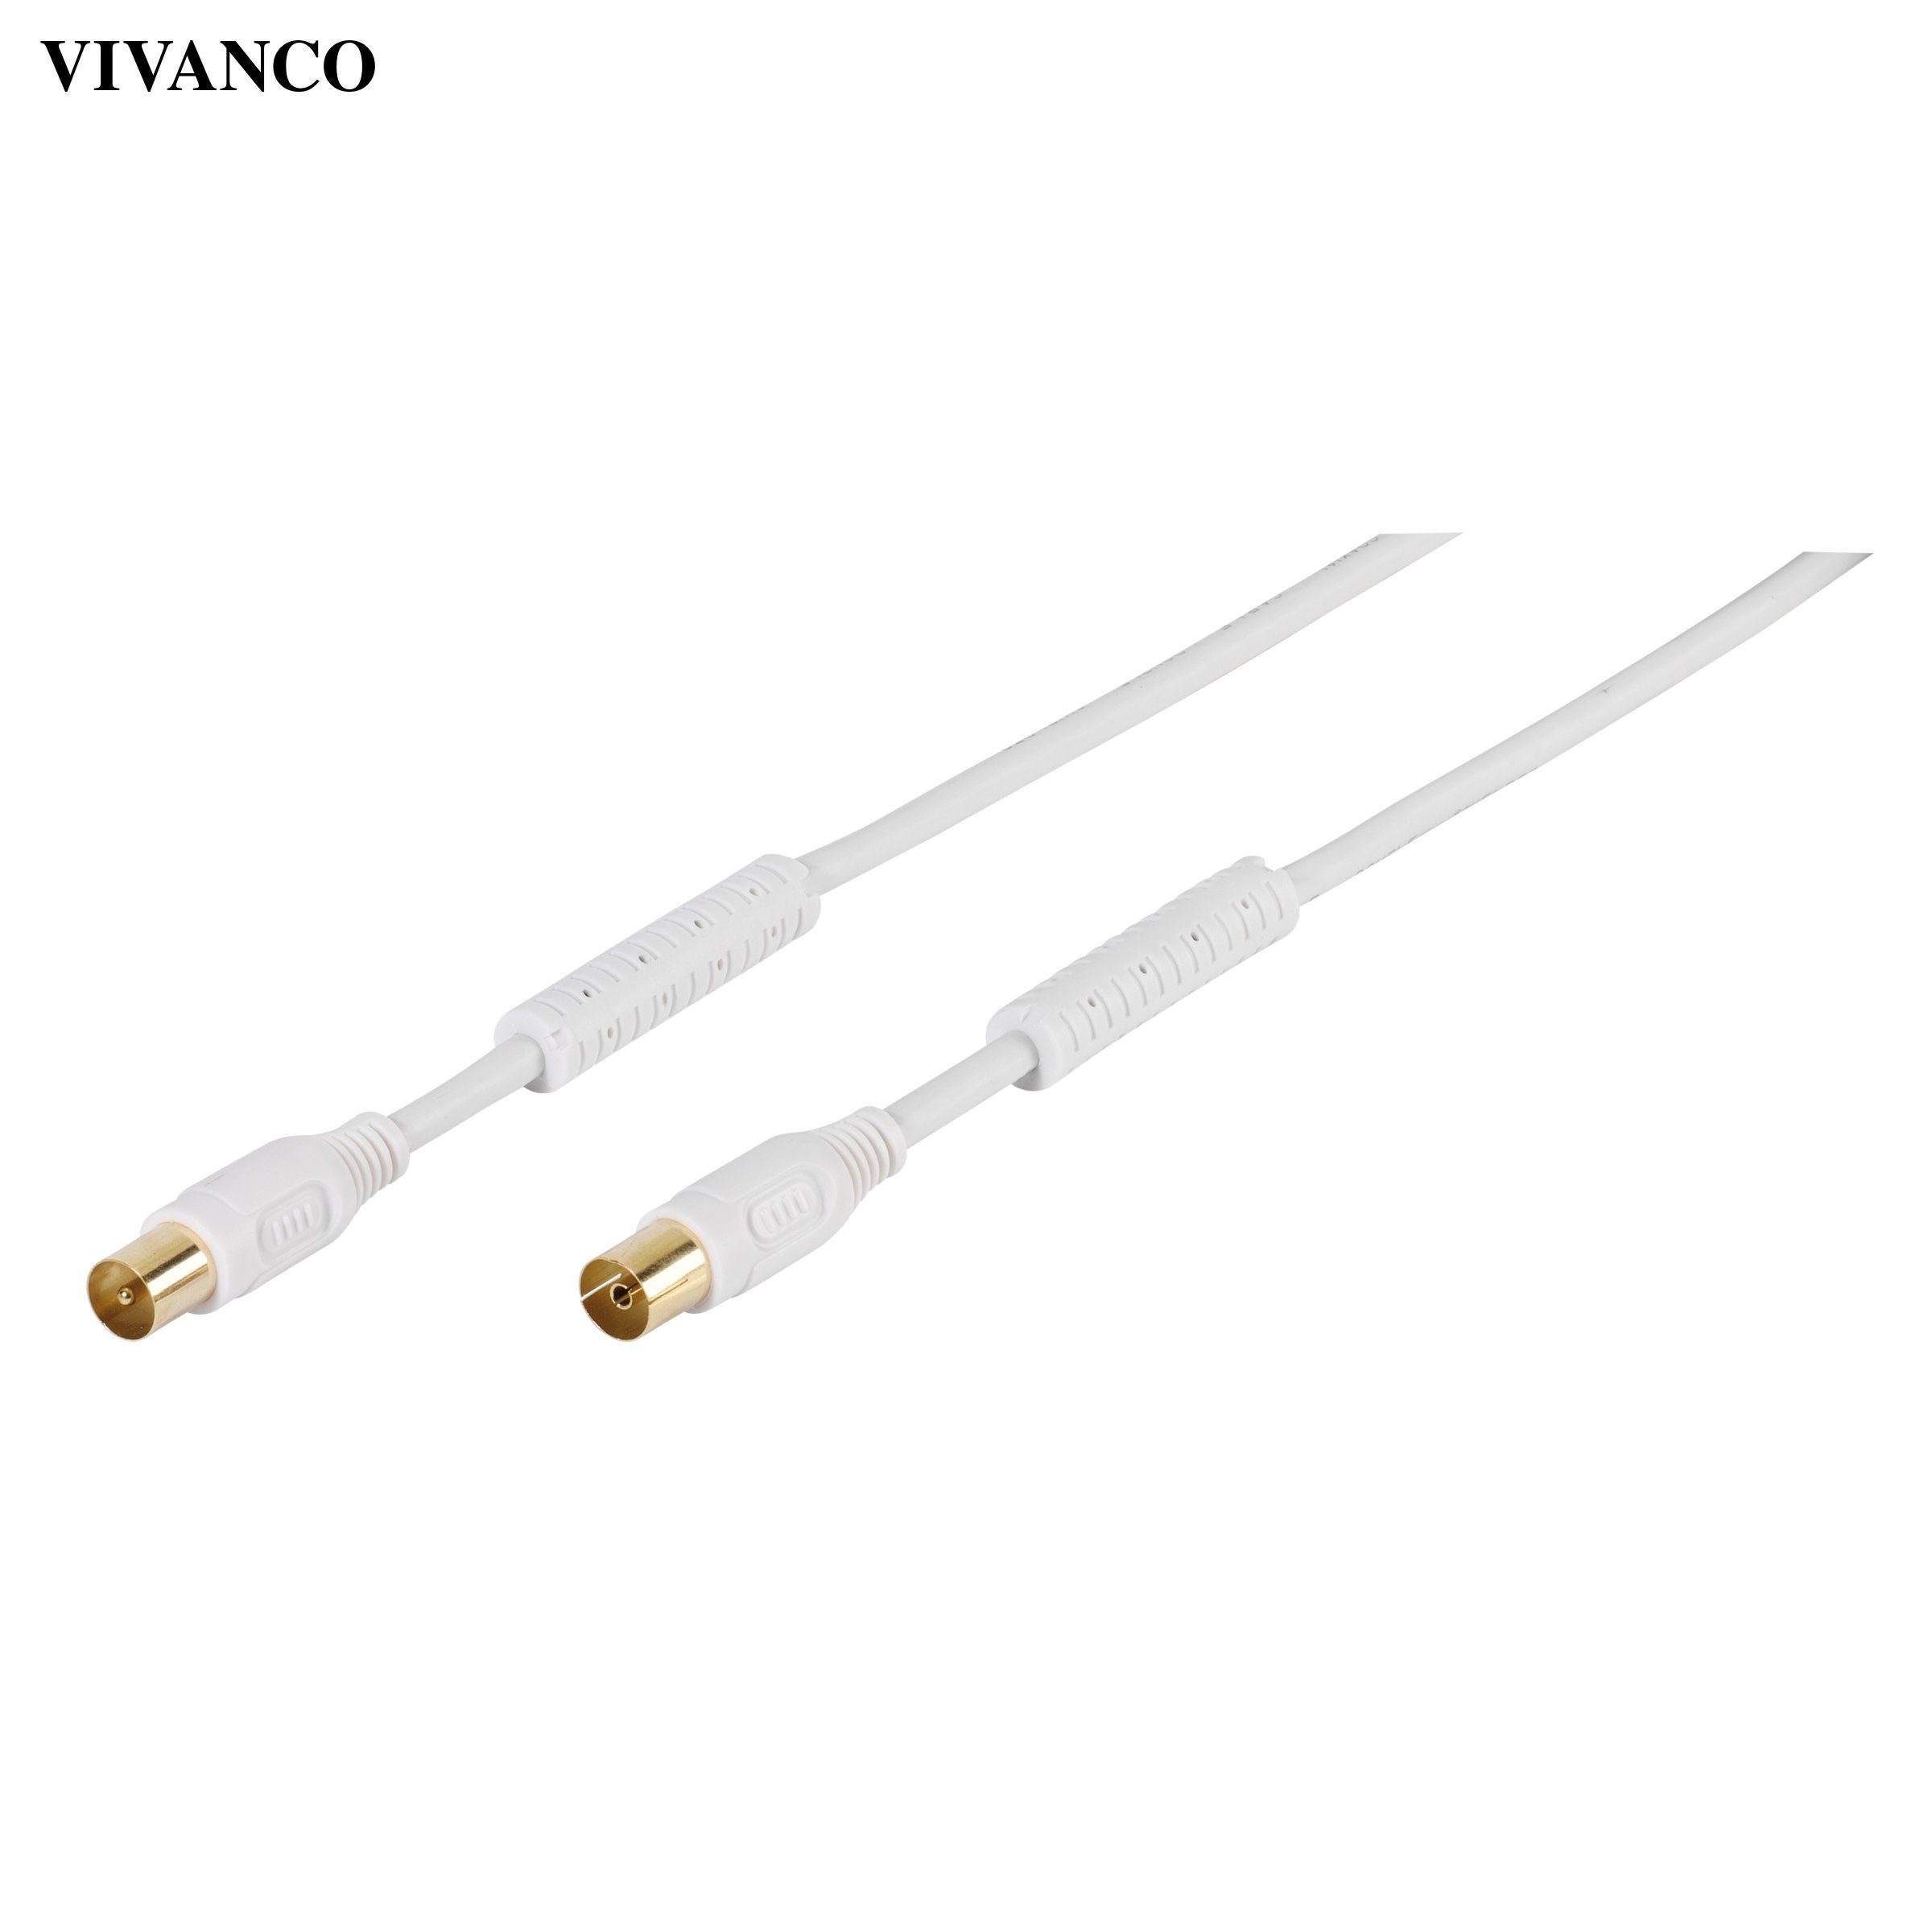 Video-Kabel, Vivanco 100dB vergoldet, Antennenkabel,